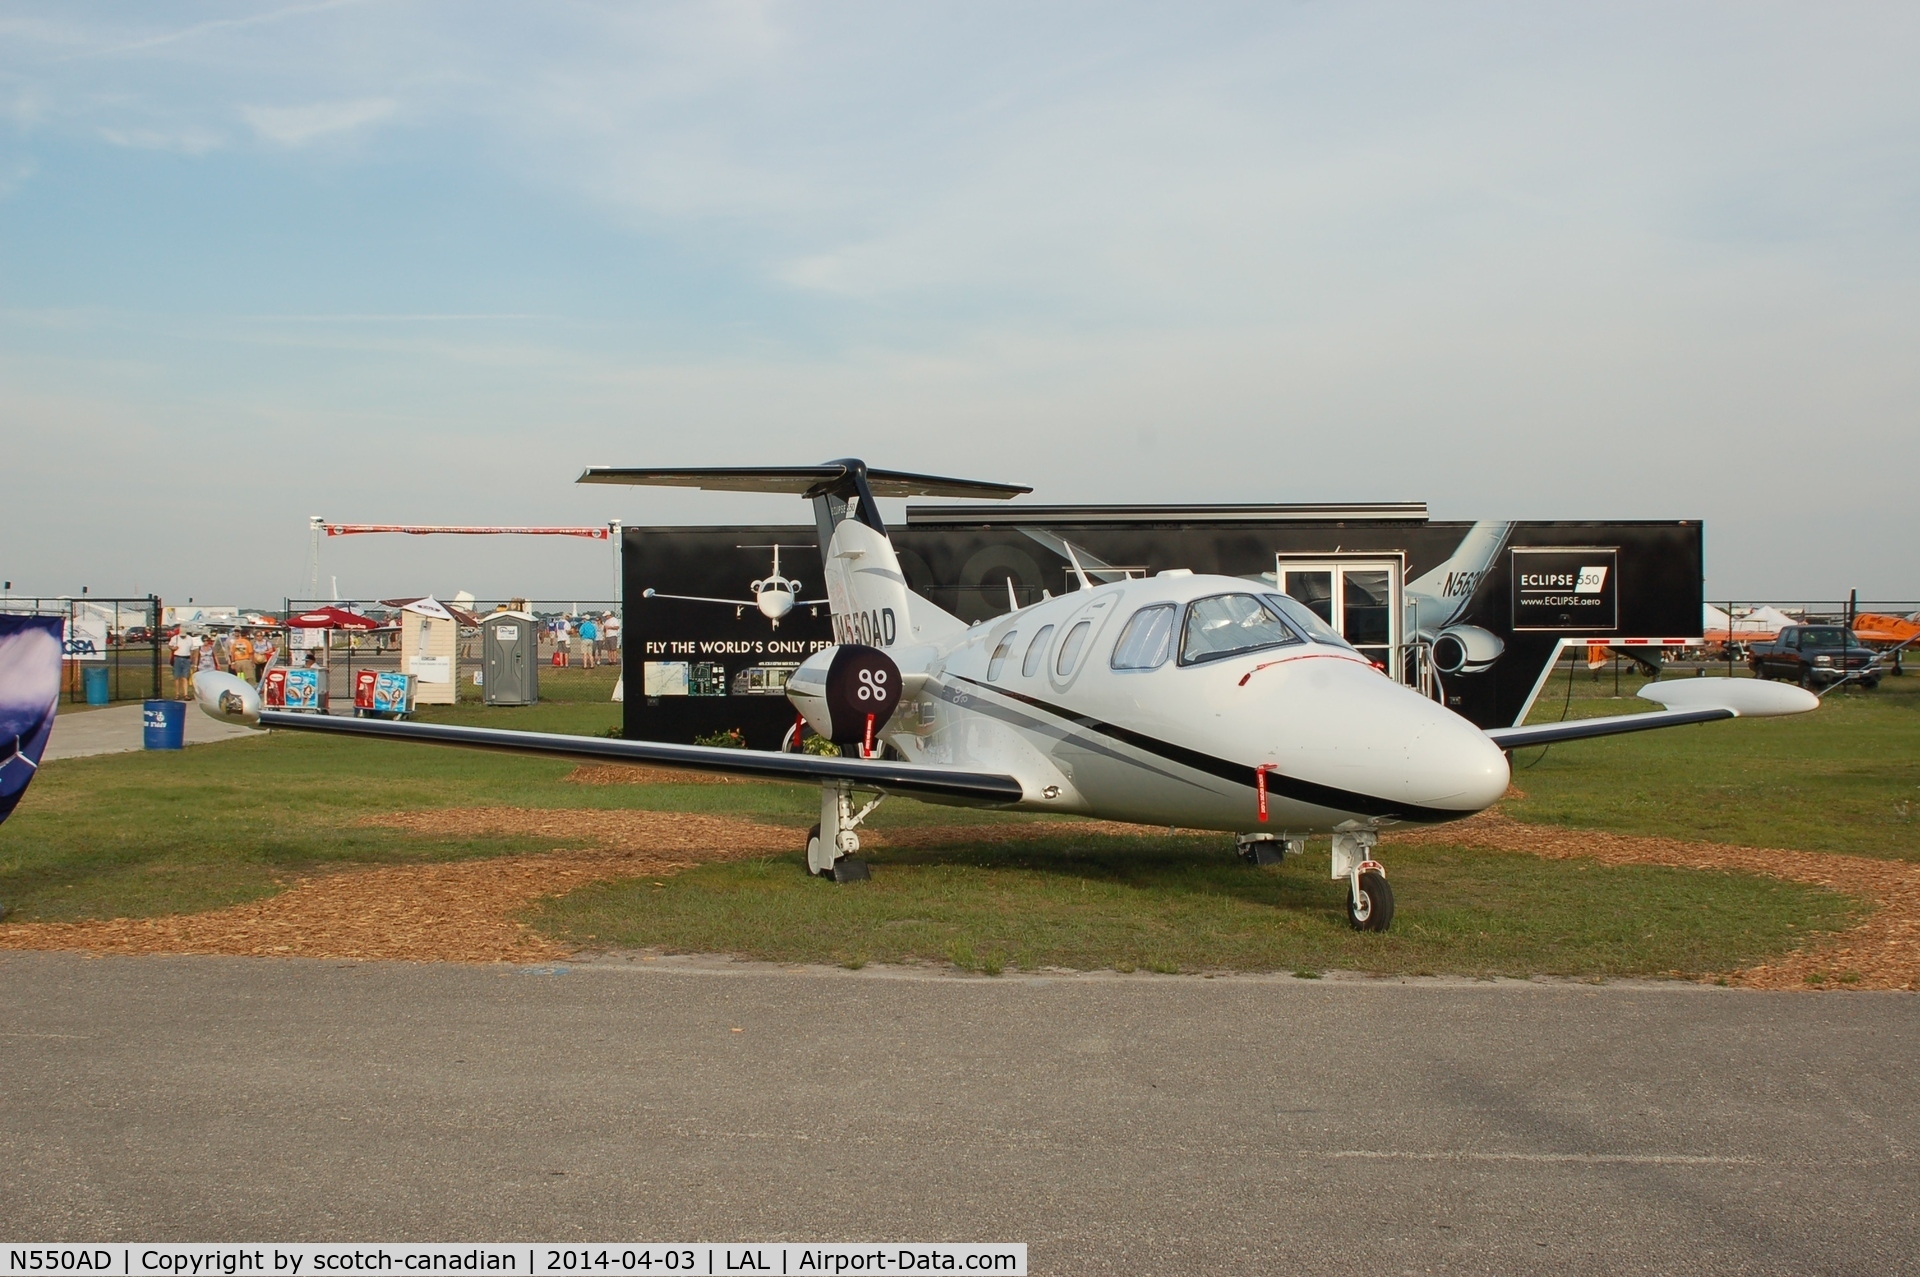 N550AD, 2008 Eclipse Aviation Corp EA500 C/N 000263, 2013 ECLIPSE AEROSPACE INC EA500, N550AD, at 2014 Sun n Fun, Lakeland Linder Regional Airport, Lakeland, FL